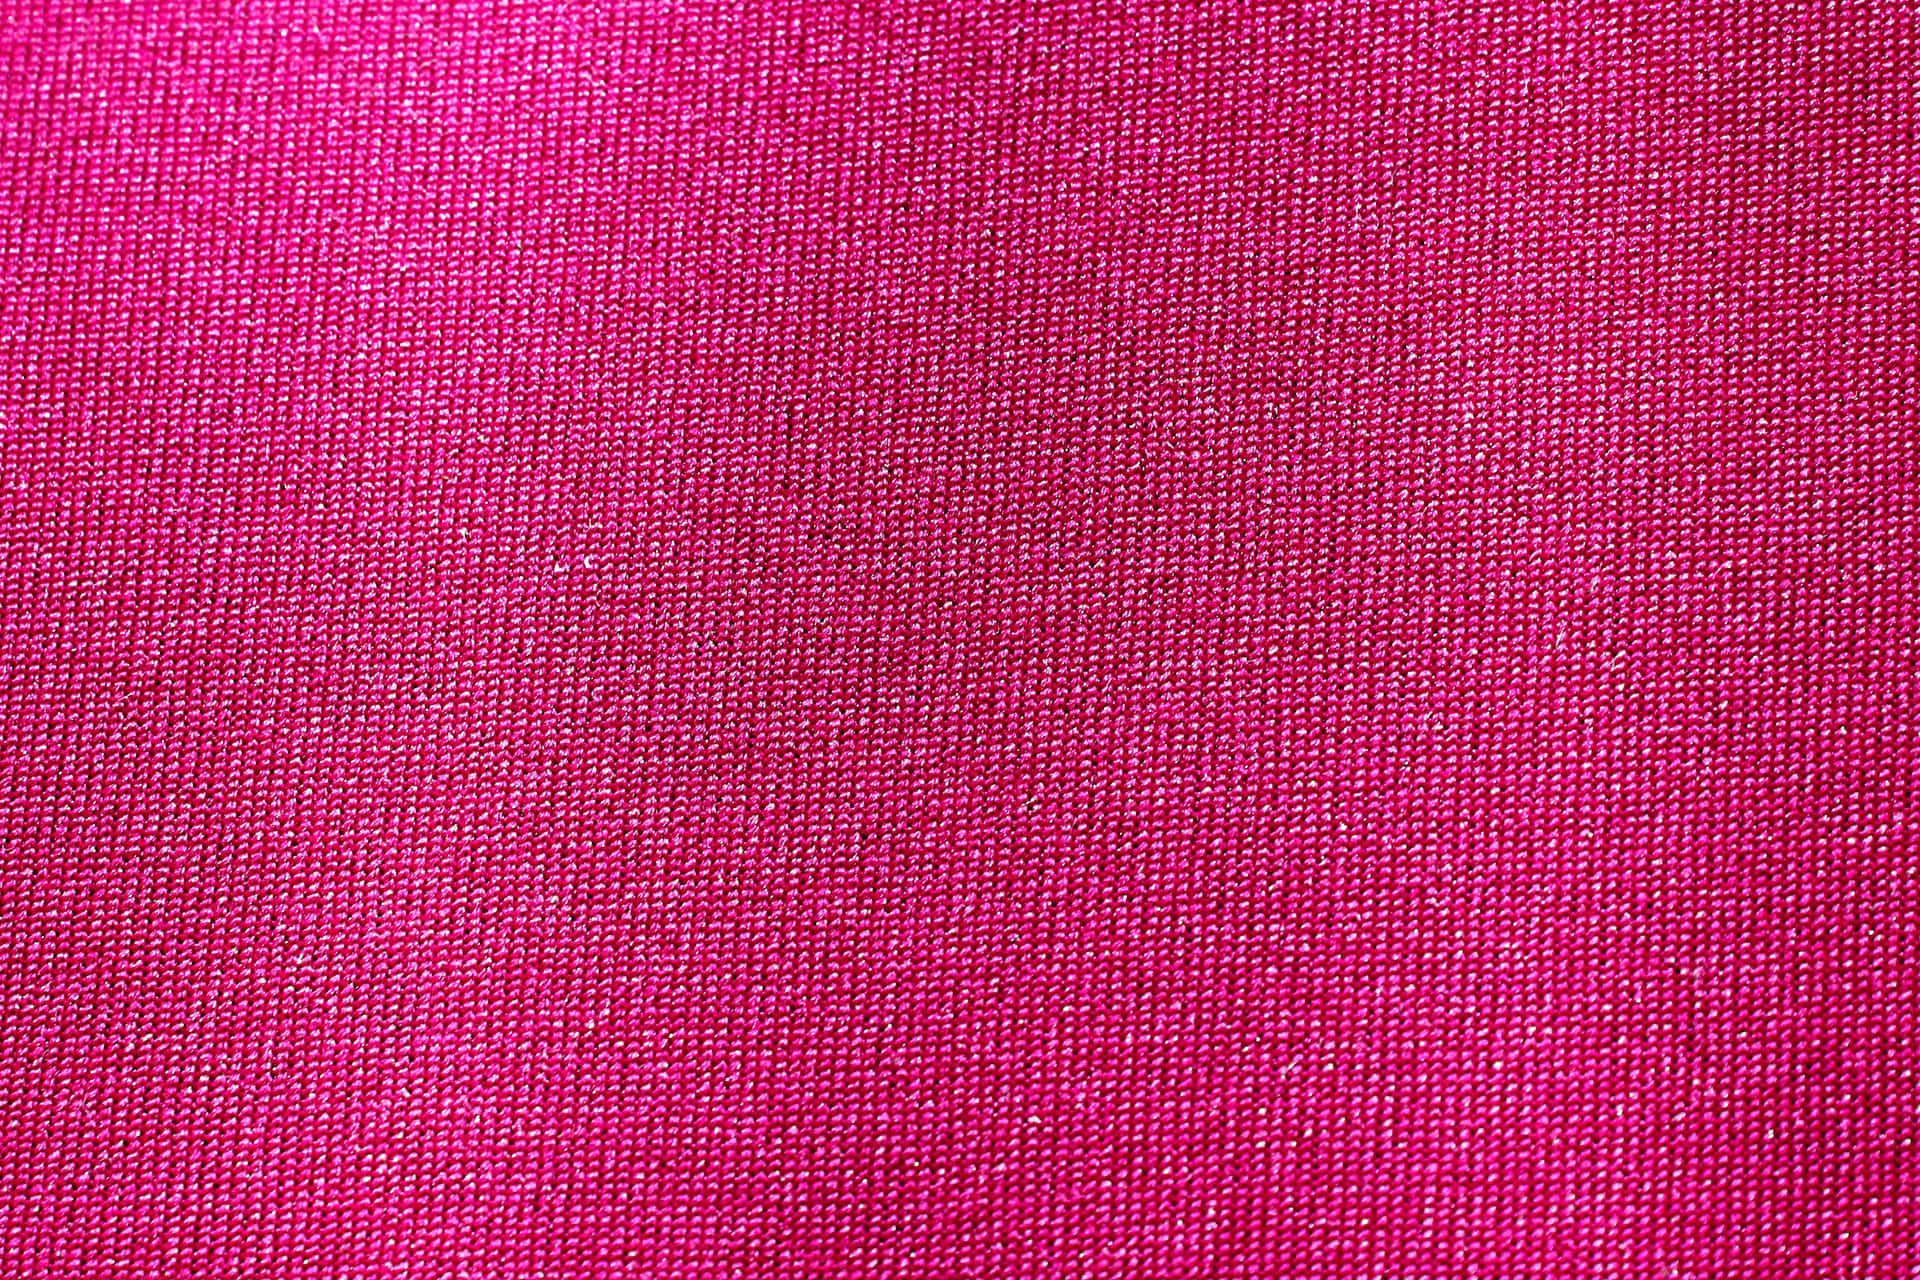 Fabric Texture Pictures Pink Velvet Silk